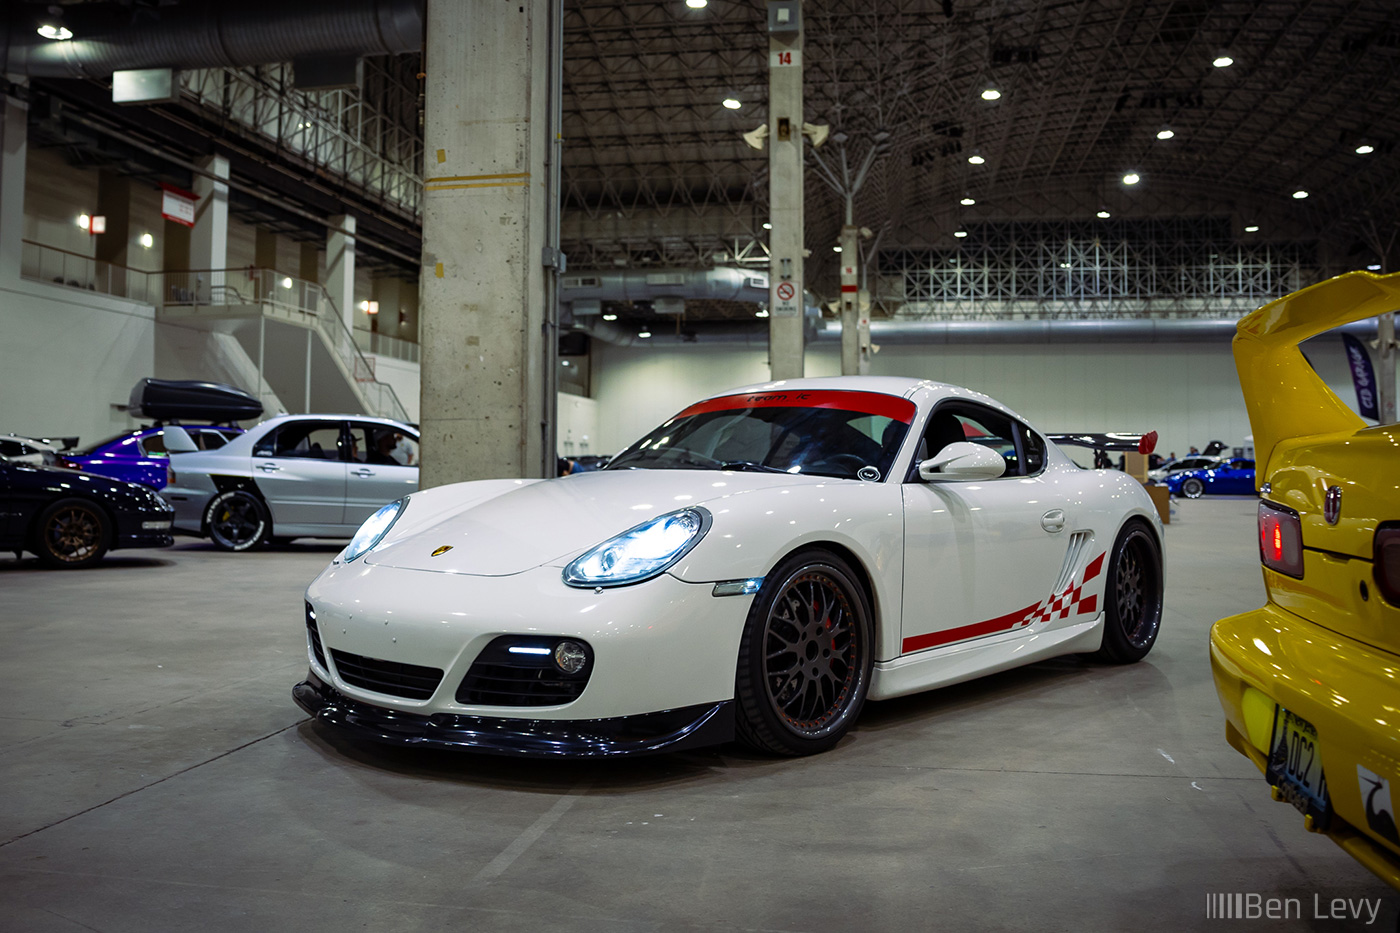 White Porsche Cayman S Leaving Wekfest Chicago